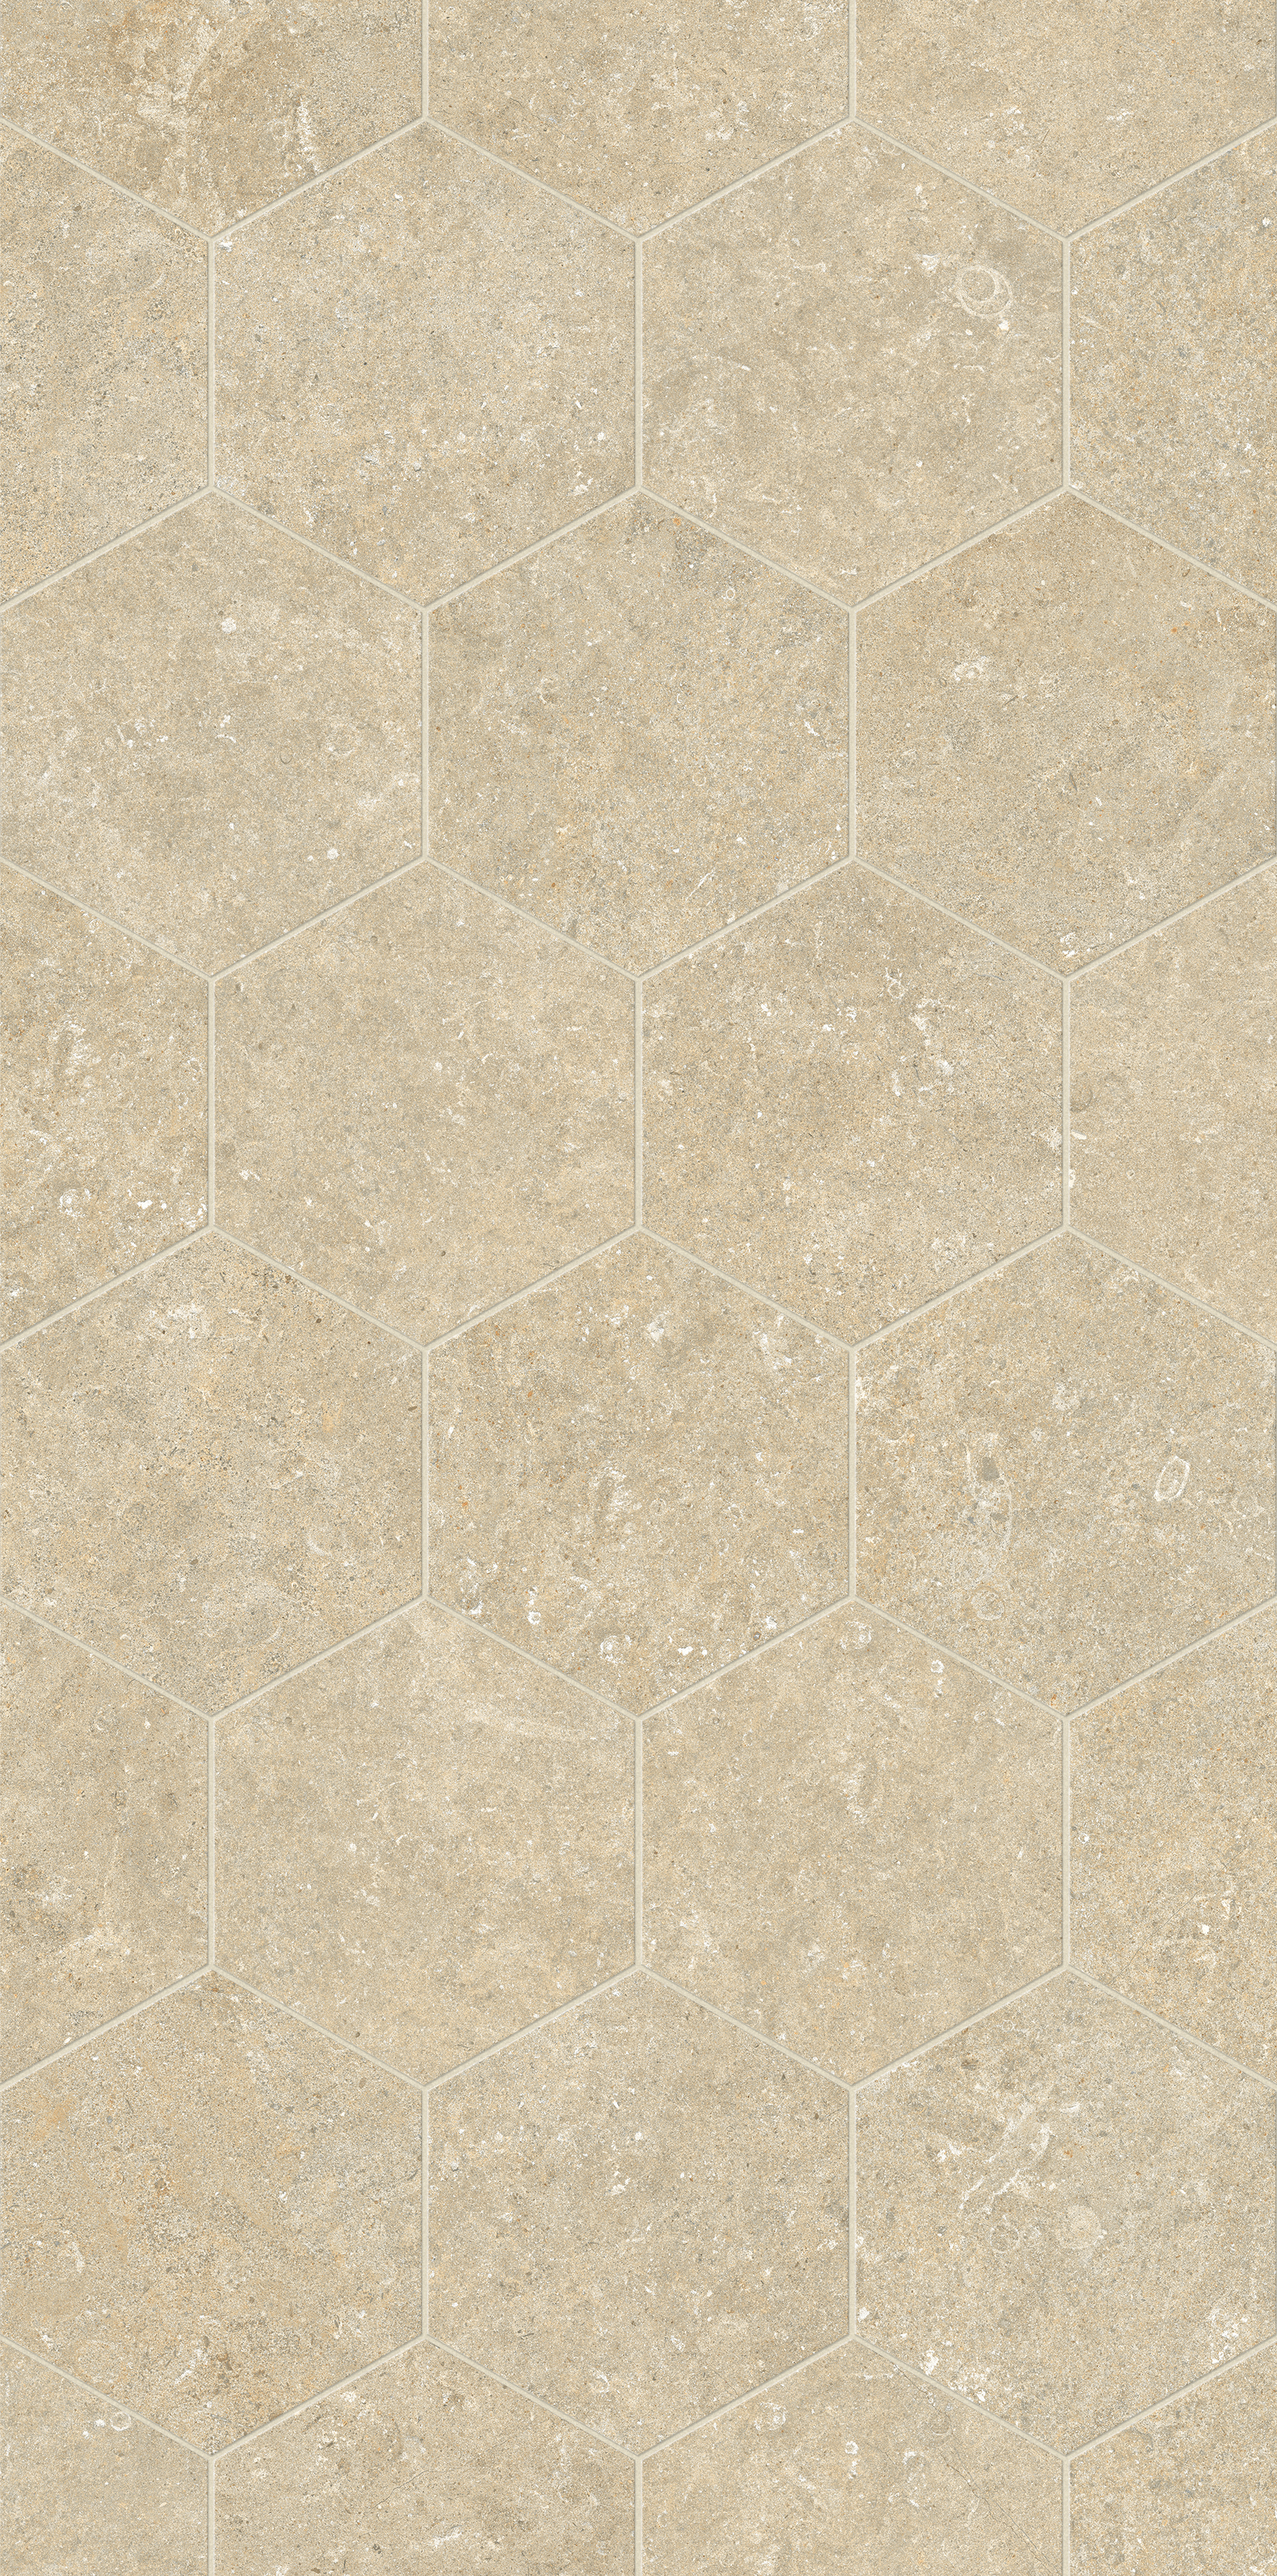 Marca Corona Arkistyle Sand Naturale – Matt Esagona J160 naturale – matt 21,6x25cm 9mm